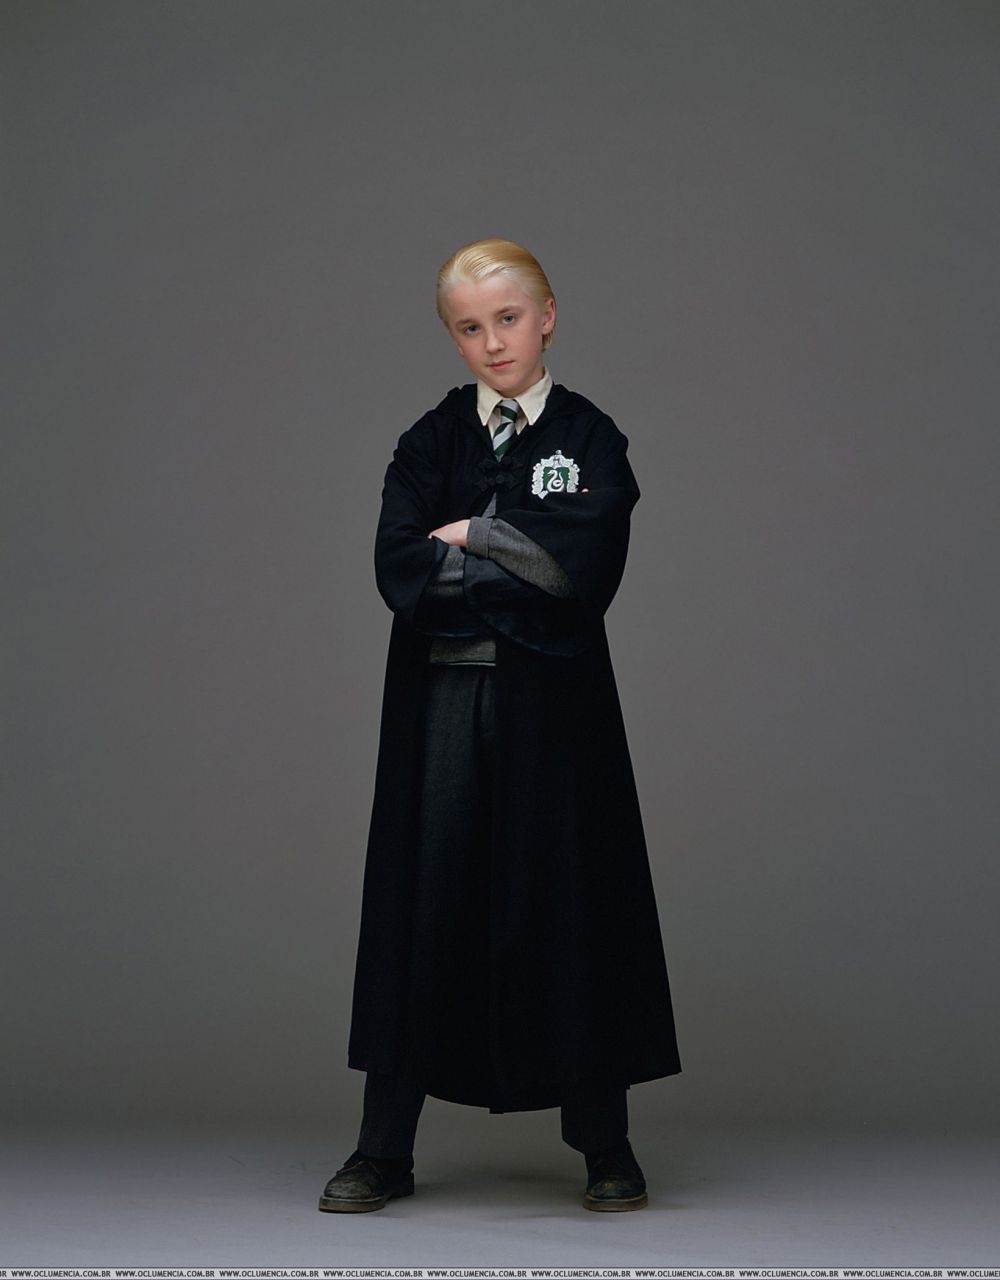 Karakternya dibenci, tapi kini 'Draco Malfoy' gantengnya kebangetan!